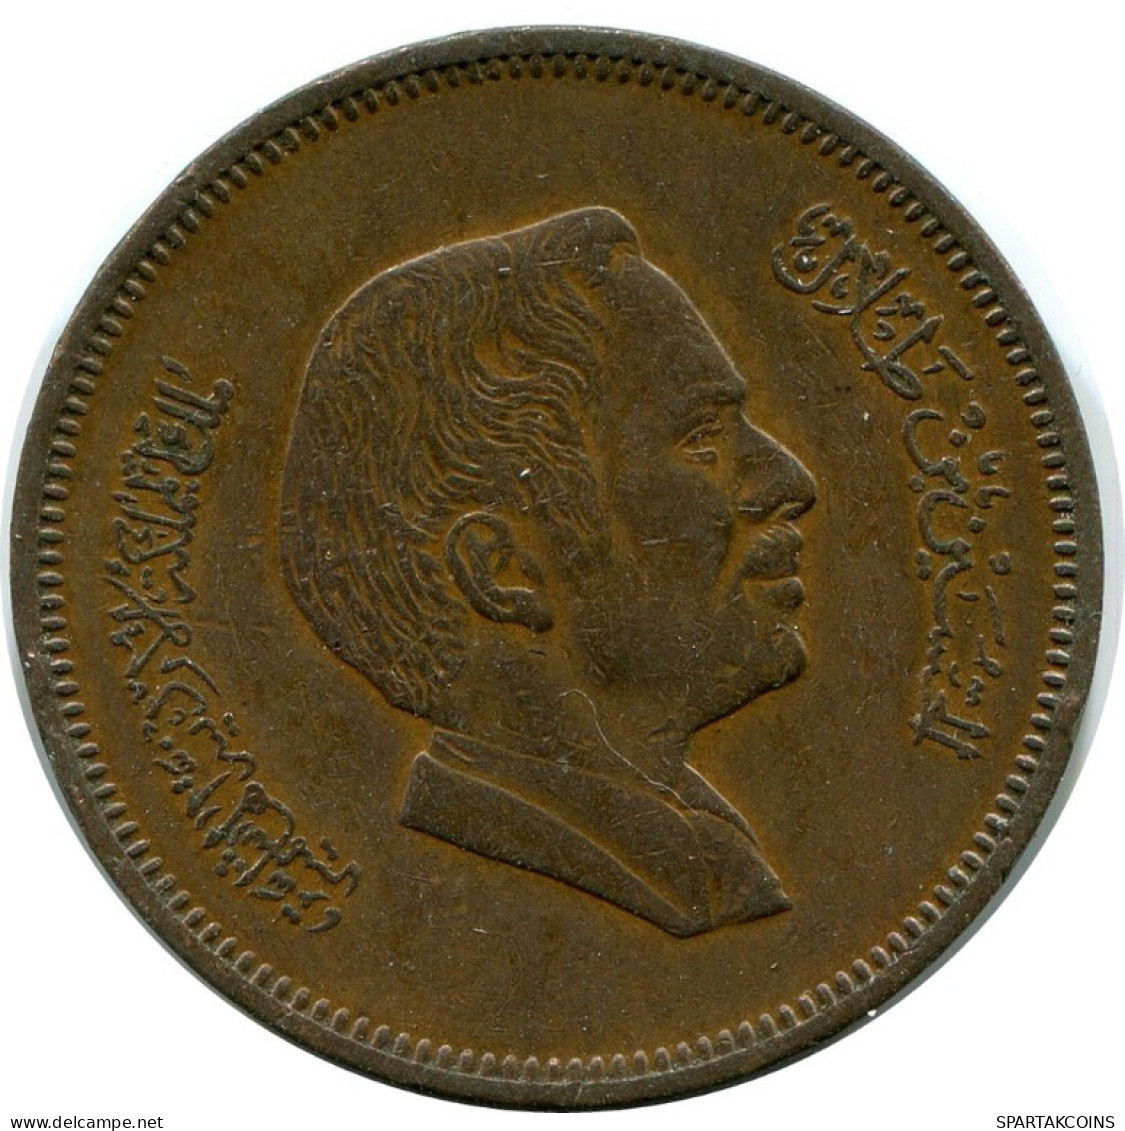 10 FILS 1398-1978 JORDAN Islamic Coin #AK148.U.A - Jordanien